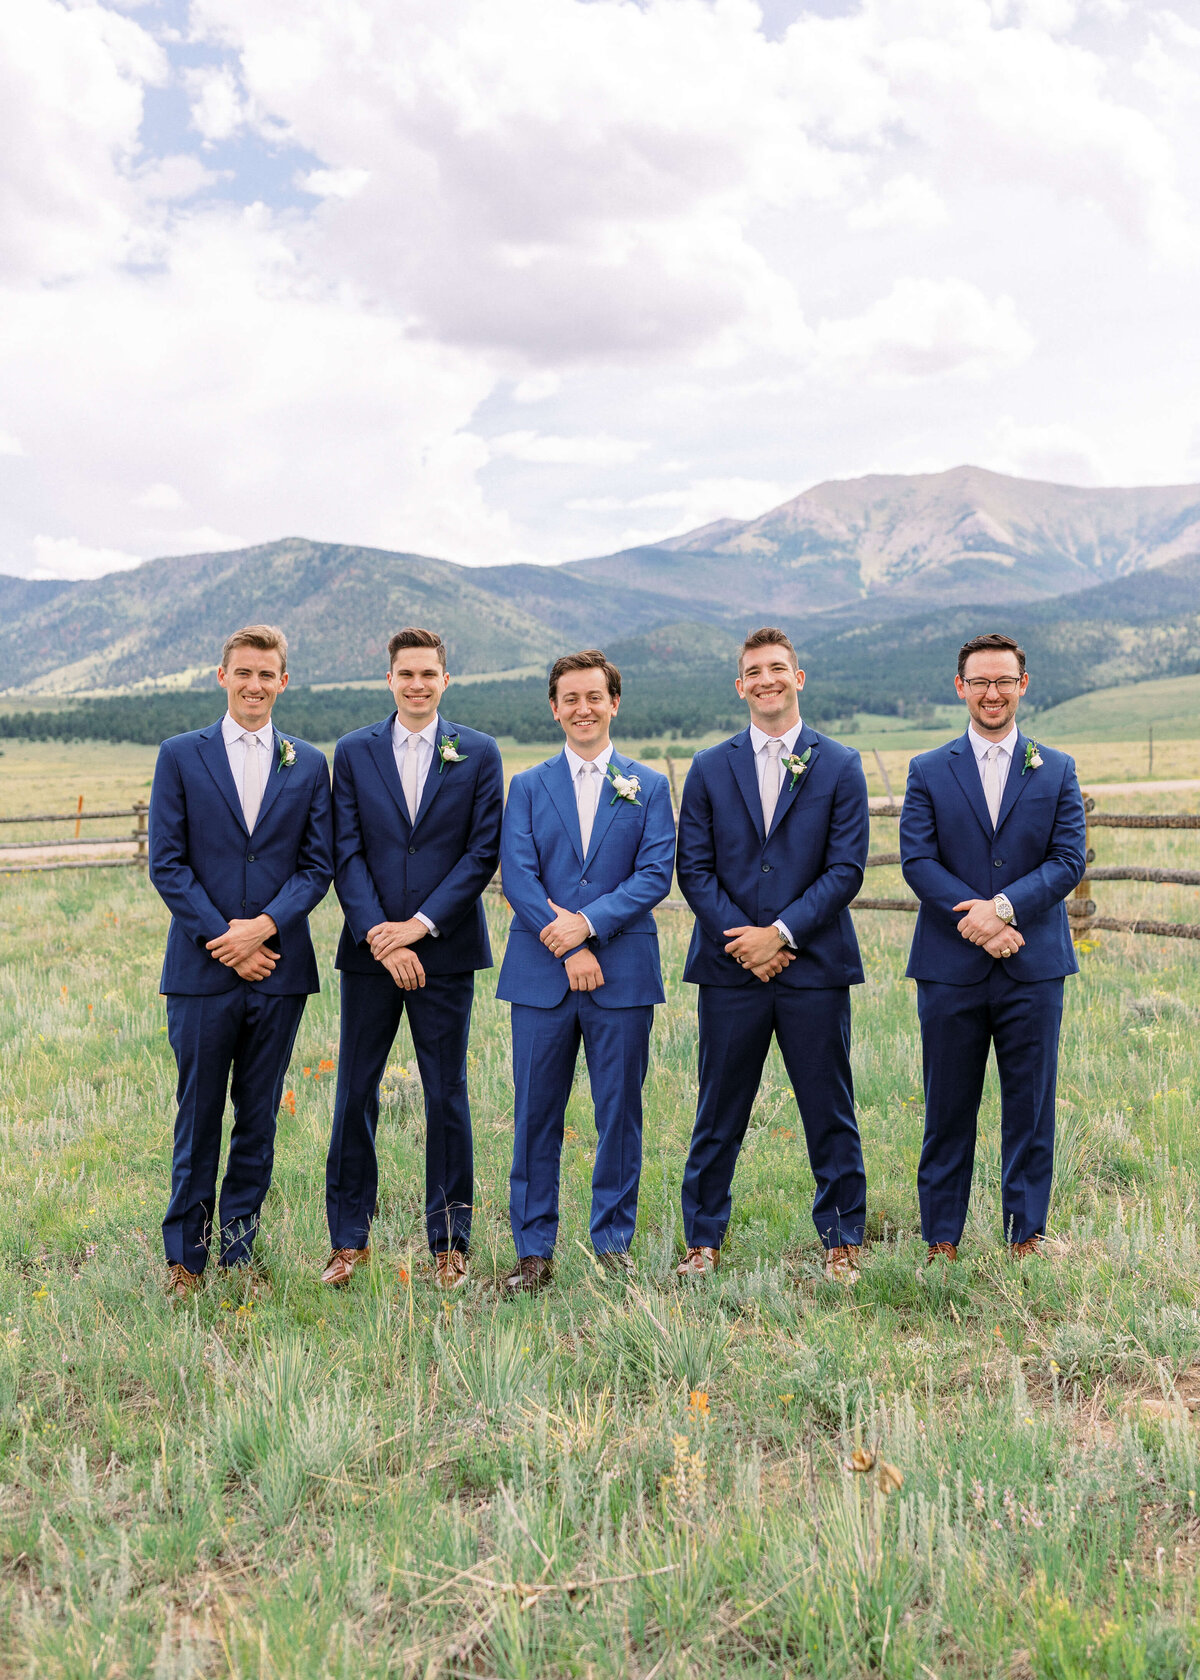 Virginia Wedding photographer captures an image of the groom and his dapper groomsmen